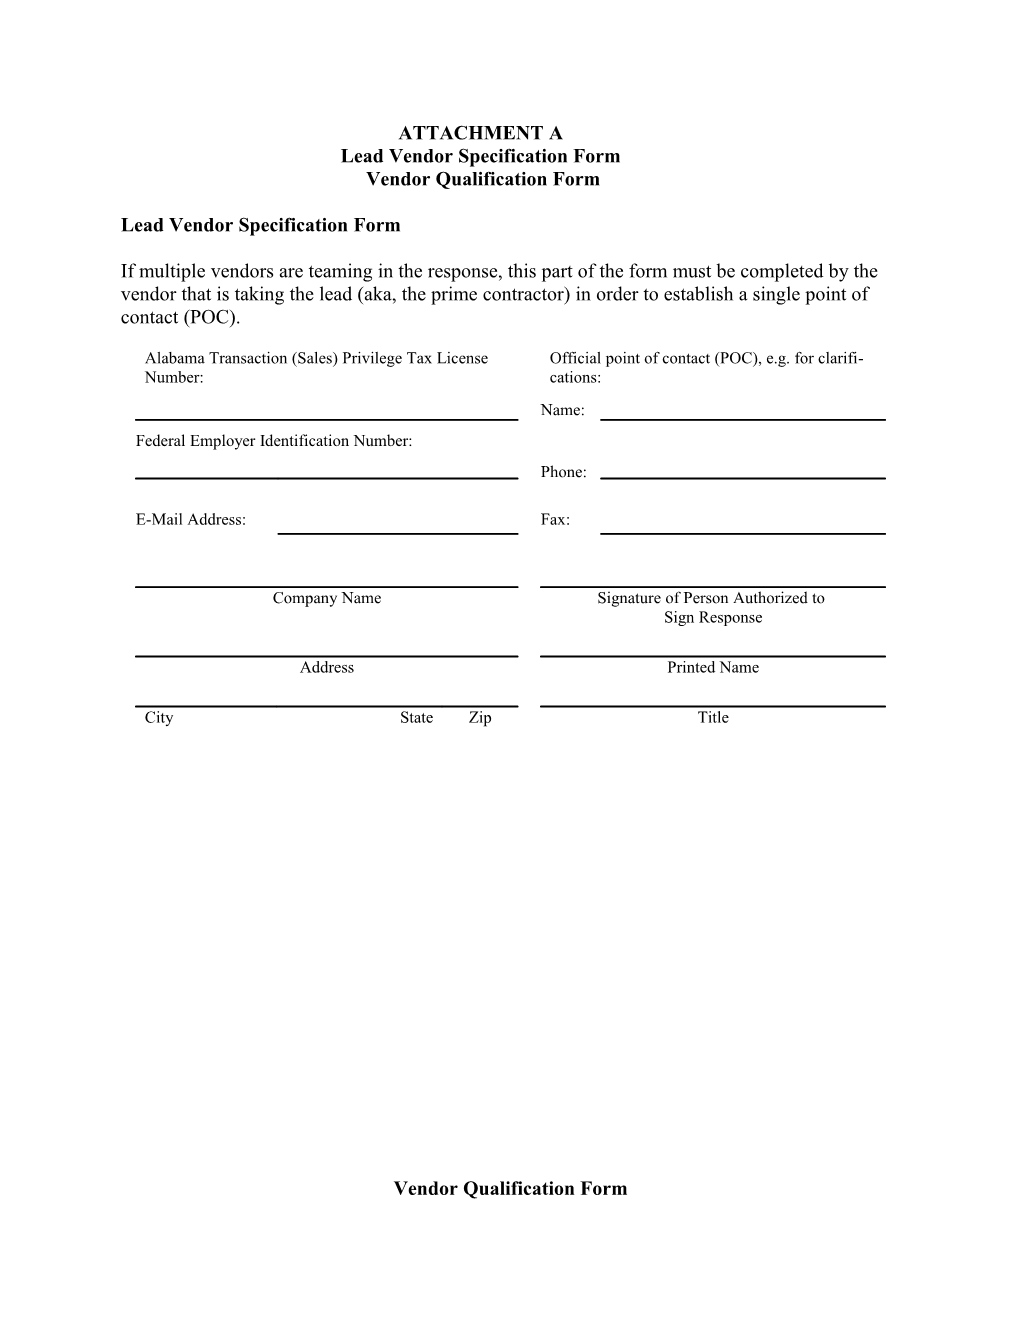 Lead Vendor Specification Form